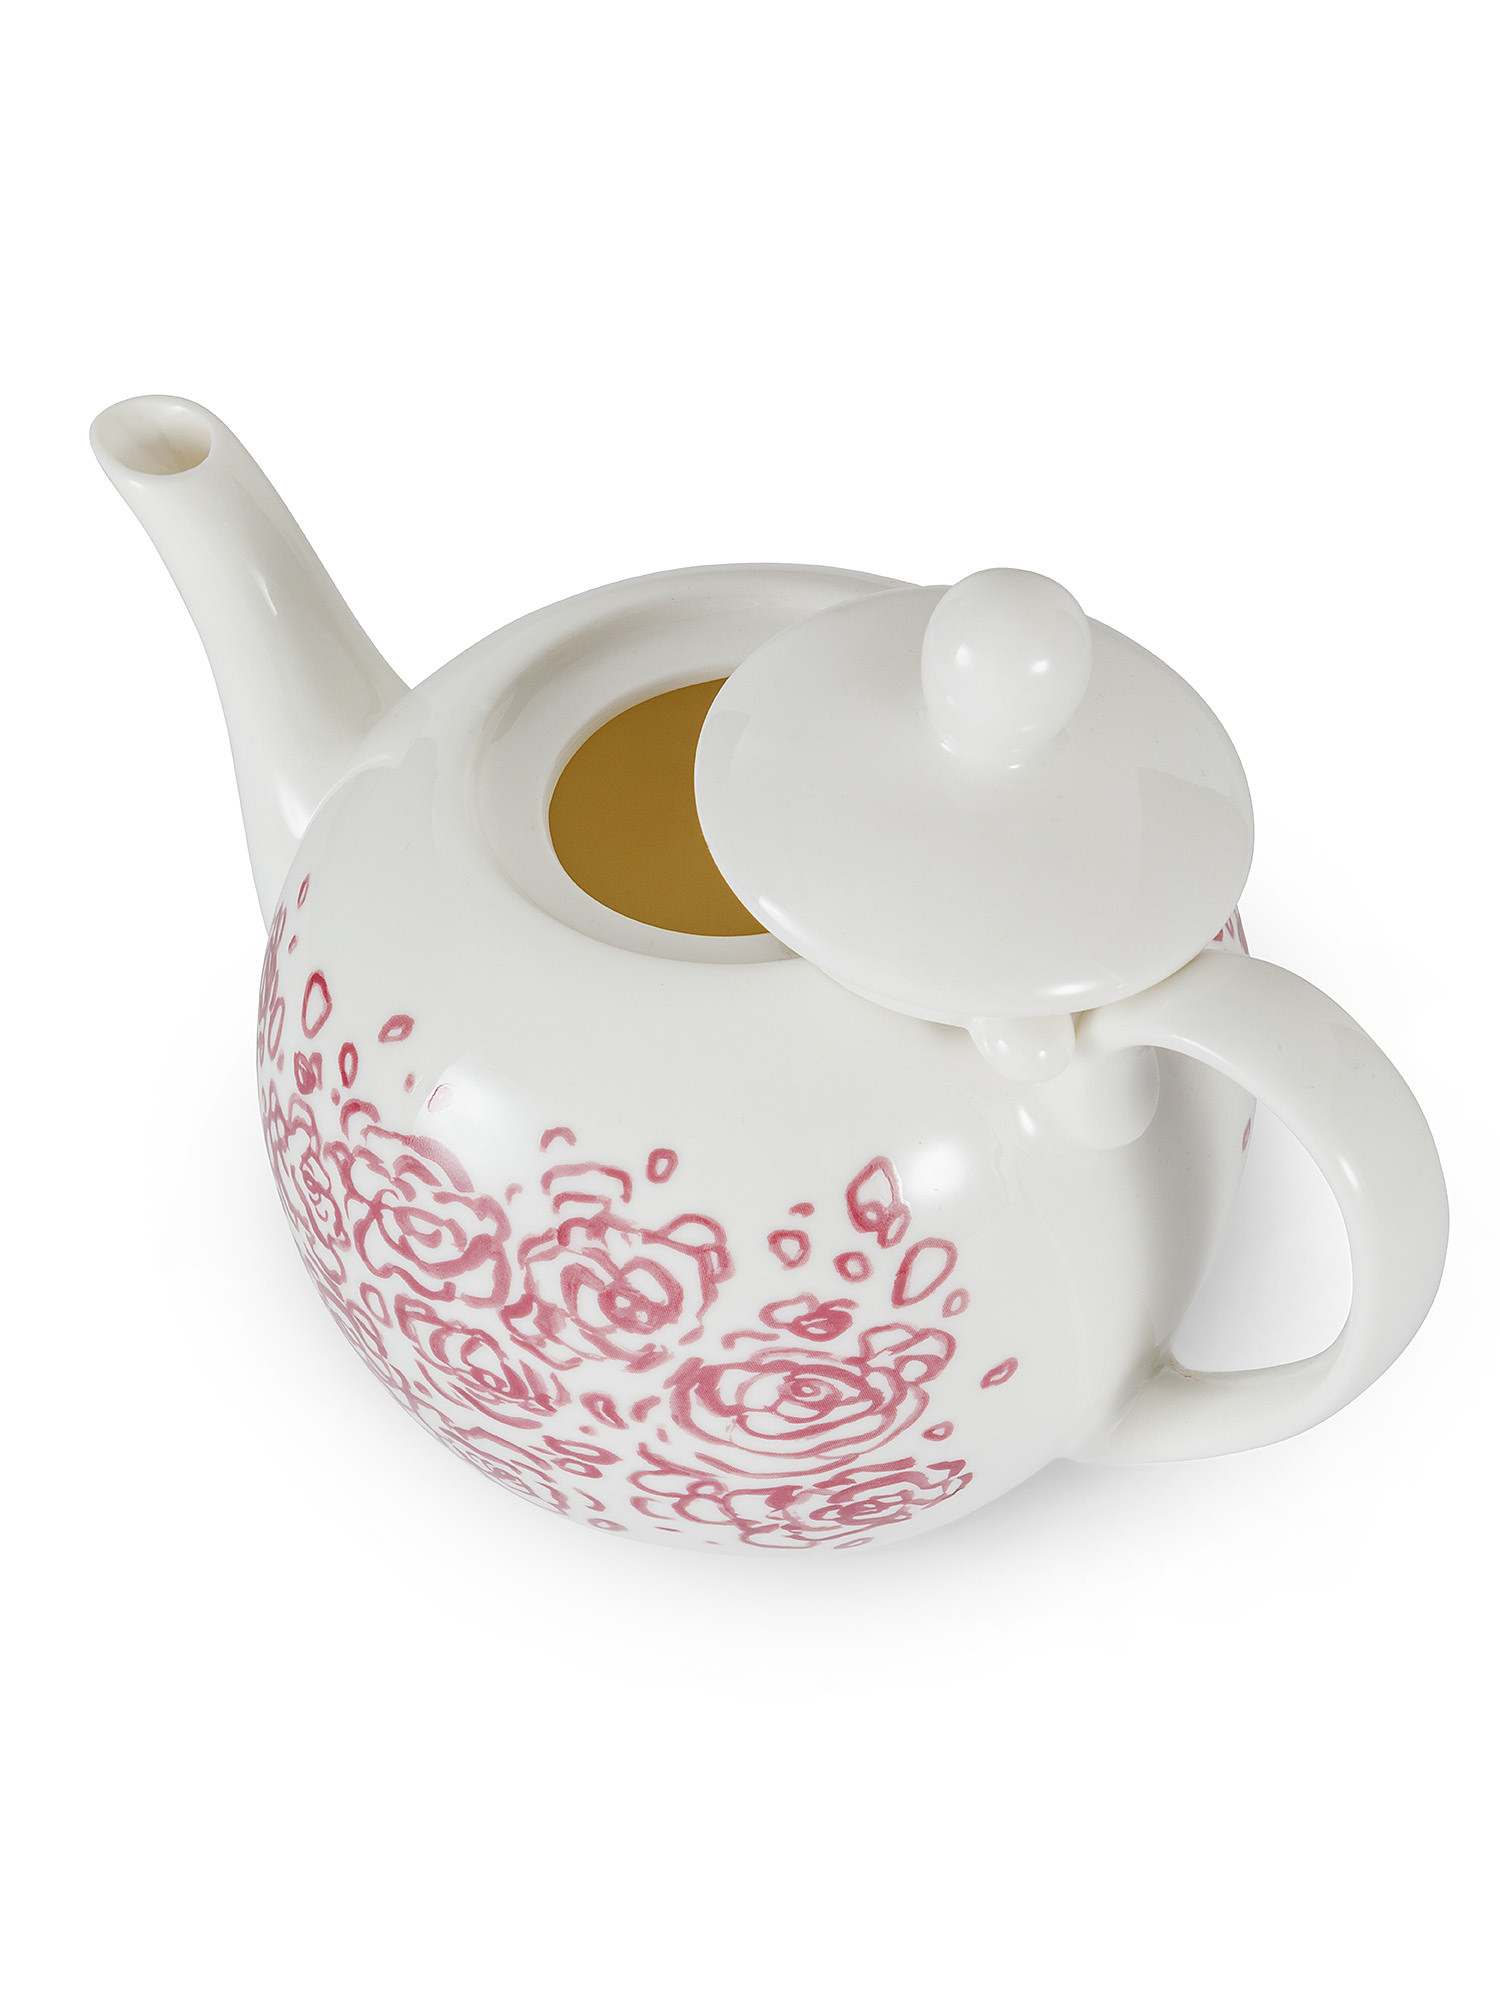 New bone china teapot with roses decoration, White, large image number 1